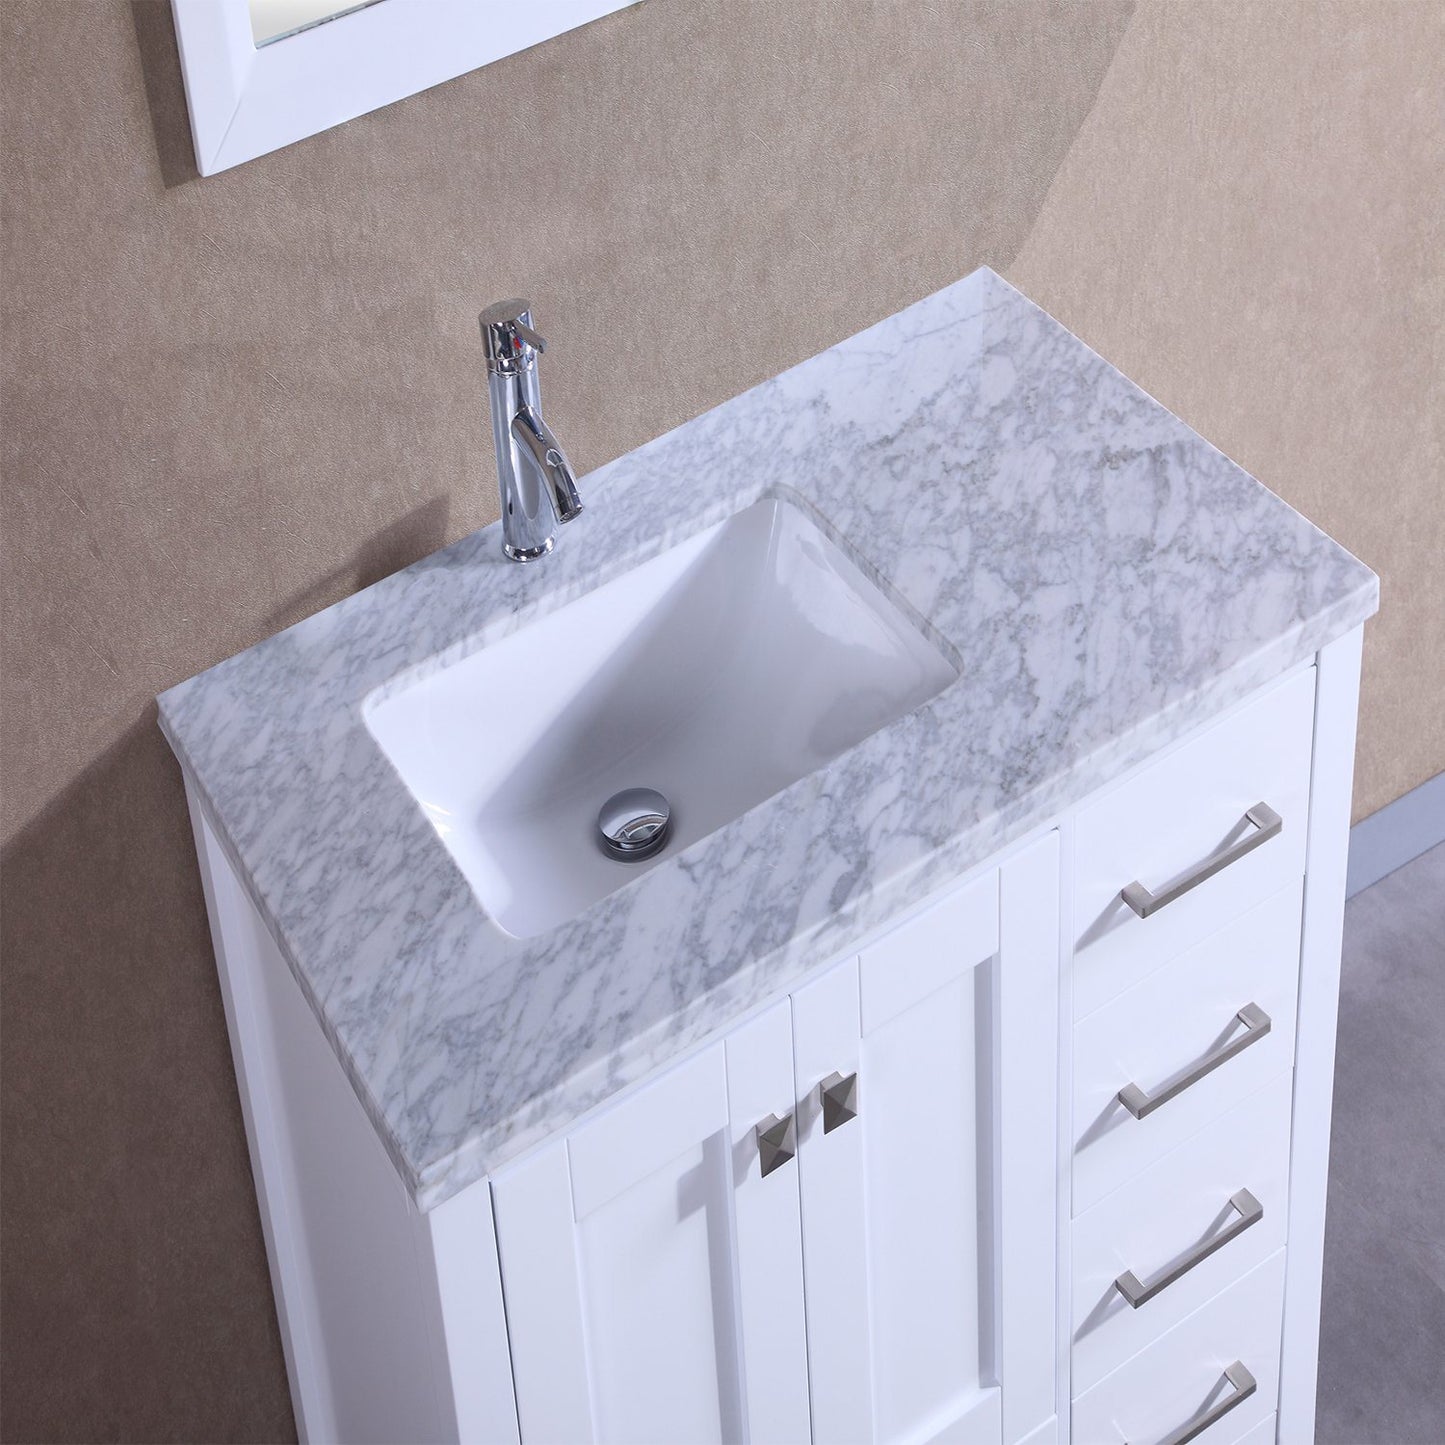 Totti Shaker 36" Transitional Bathroom Vanity with White Carrera Countertop - Luxe Bathroom Vanities Luxury Bathroom Fixtures Bathroom Furniture